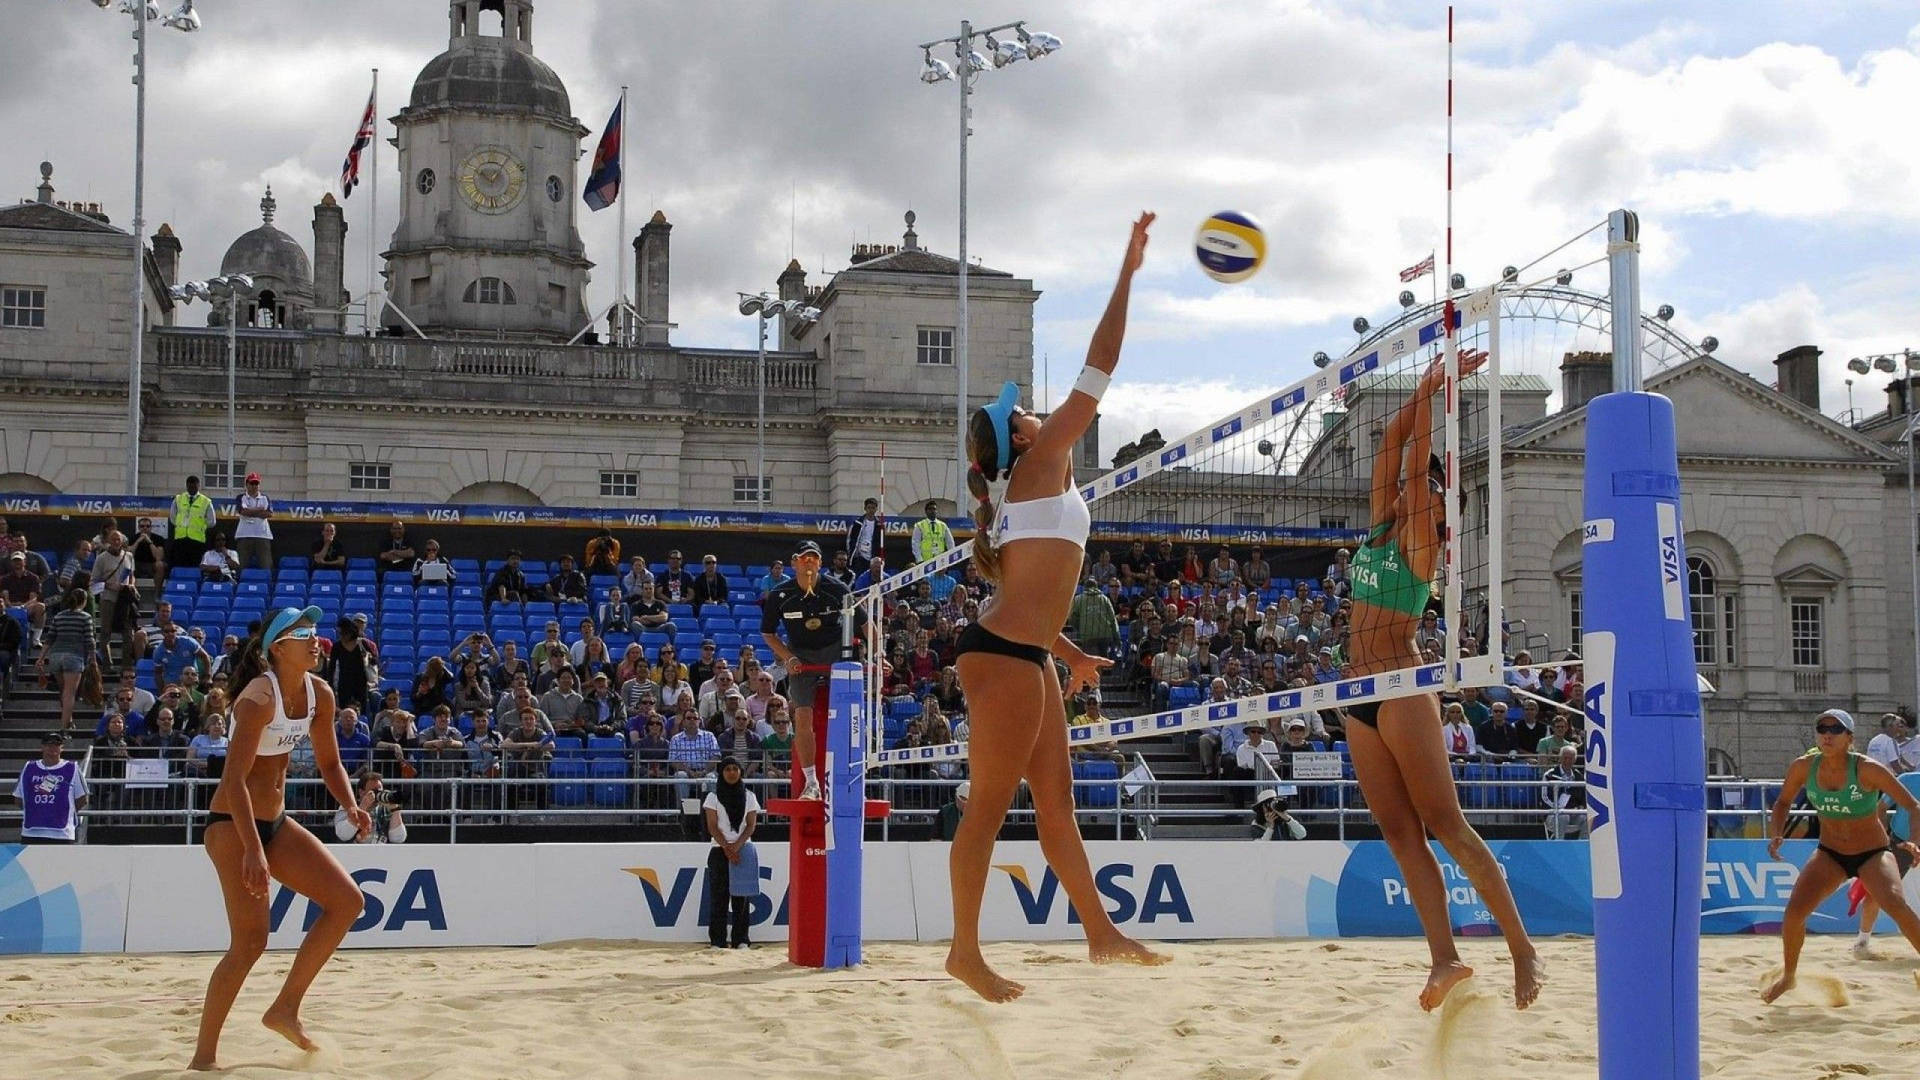 2011 Visa FIVB Beach Volleyball In London Wallpaper